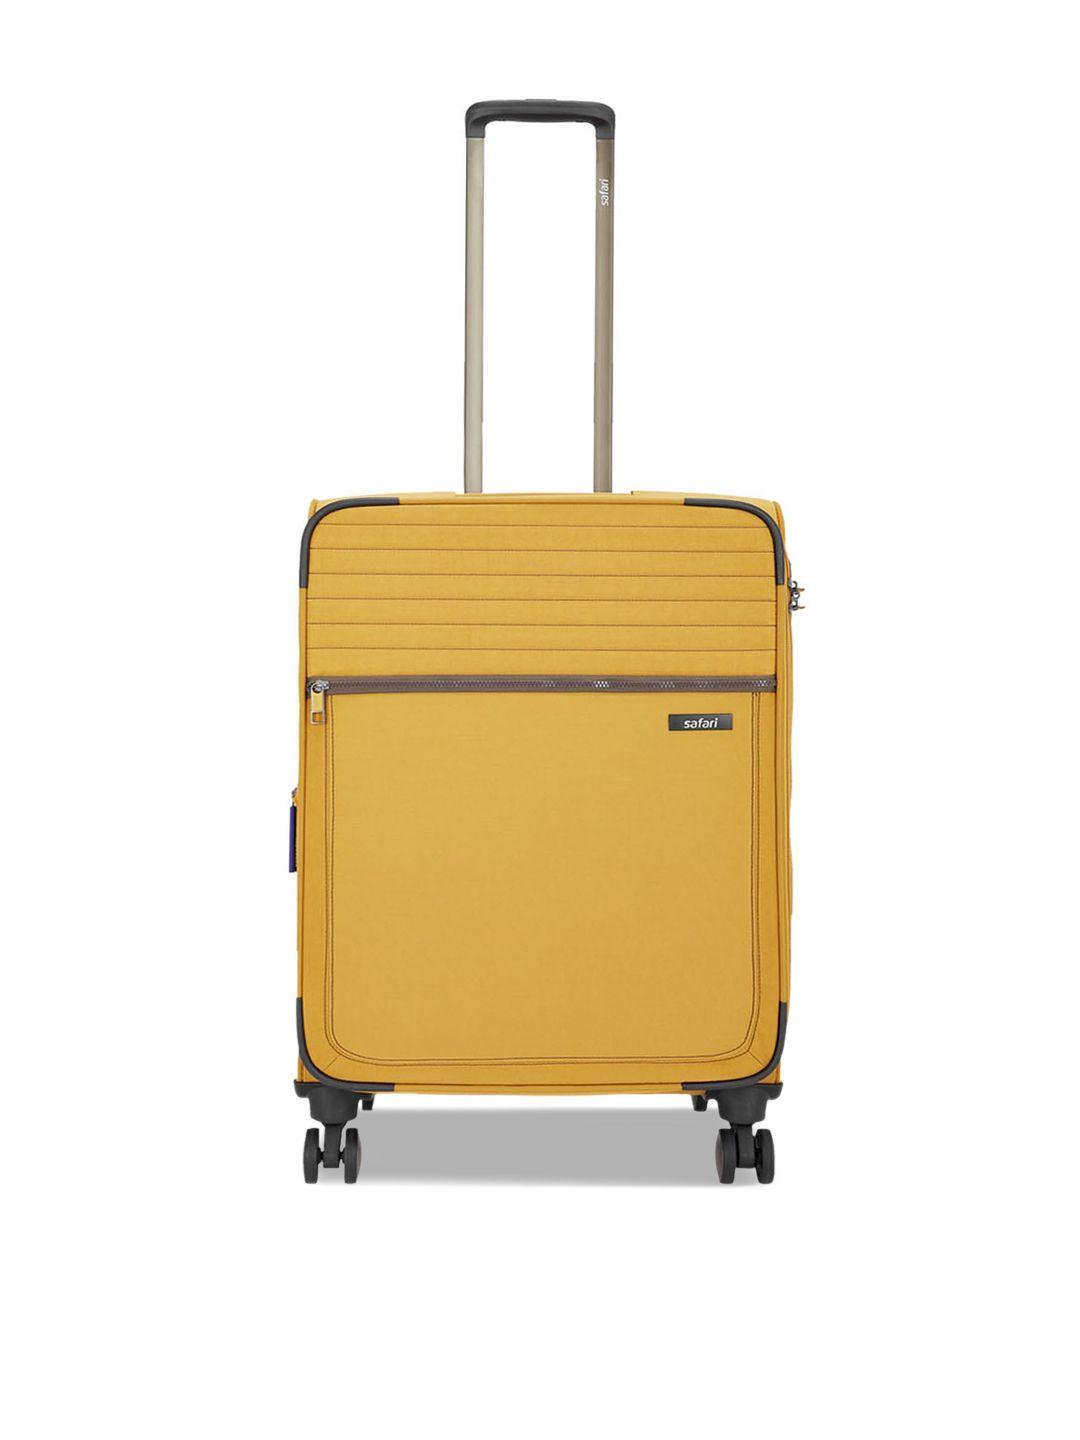 safari soft-sided cabin trolley suitcase